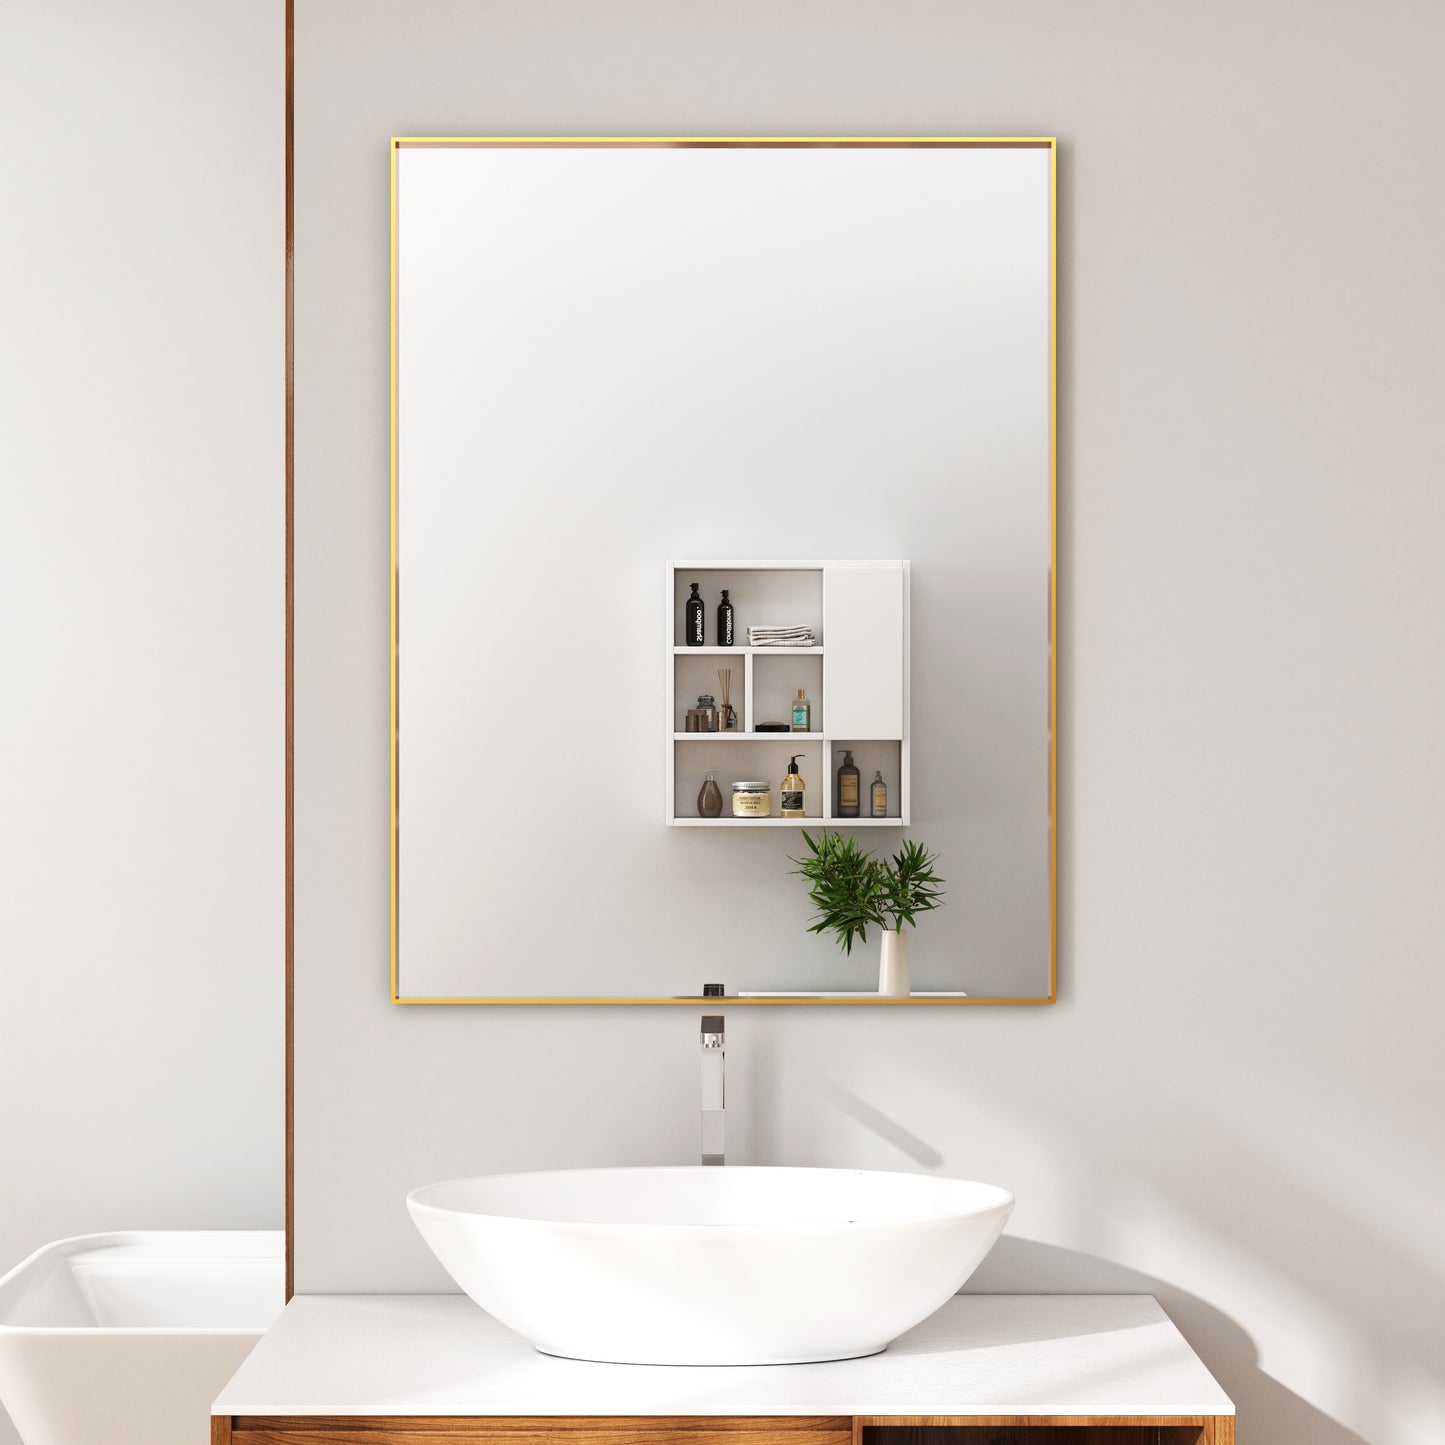 Waterpar® 28 in. W x 36 in. H Rectangular Aluminum Framed Wall Bathroom Vanity Mirror